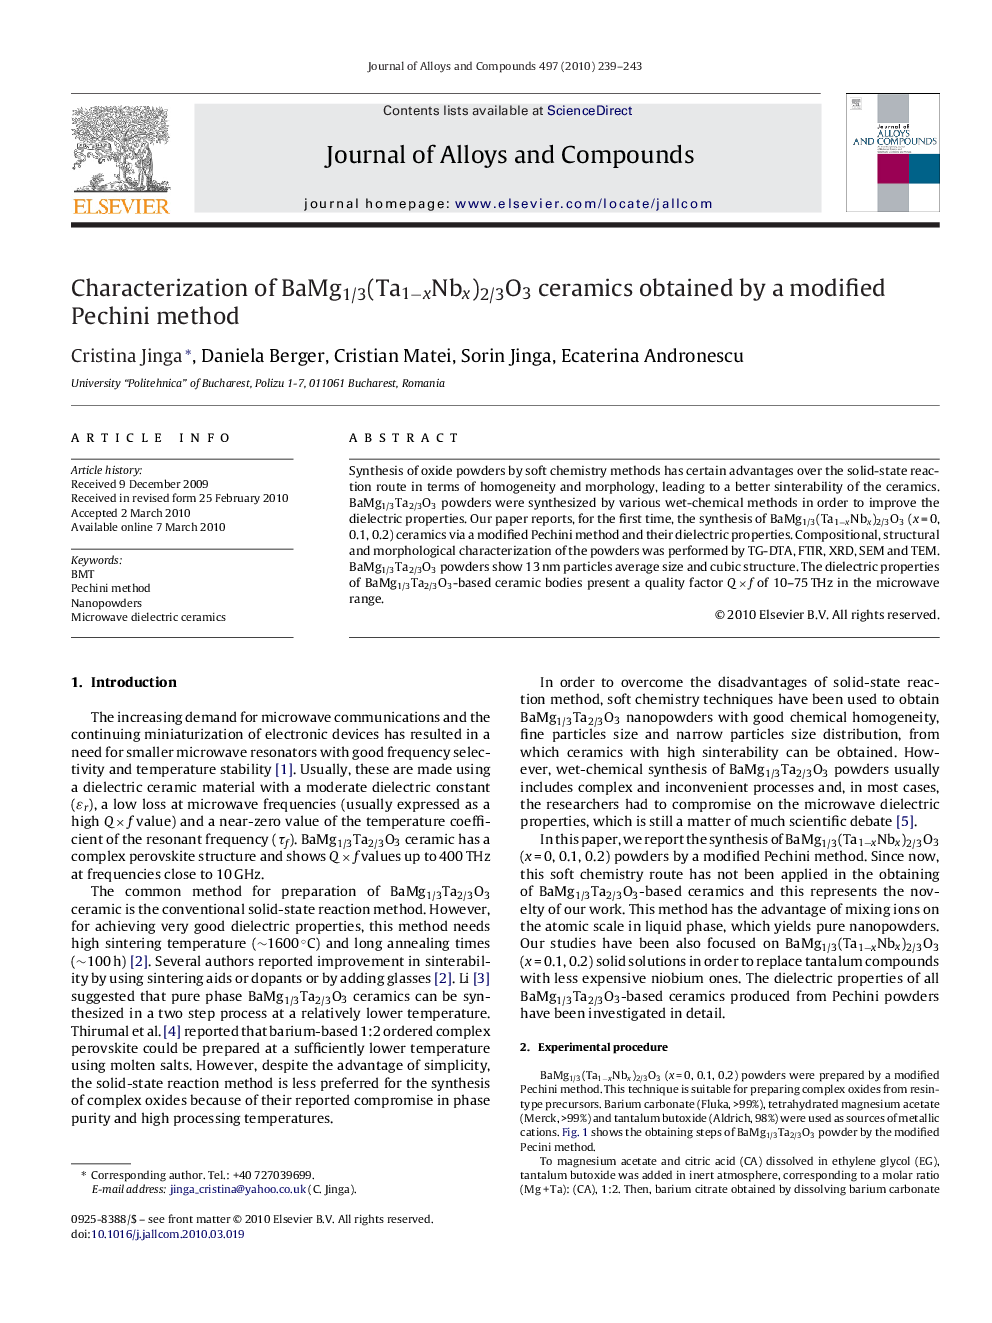 Characterization of BaMg1/3(Ta1−xNbx)2/3O3 ceramics obtained by a modified Pechini method